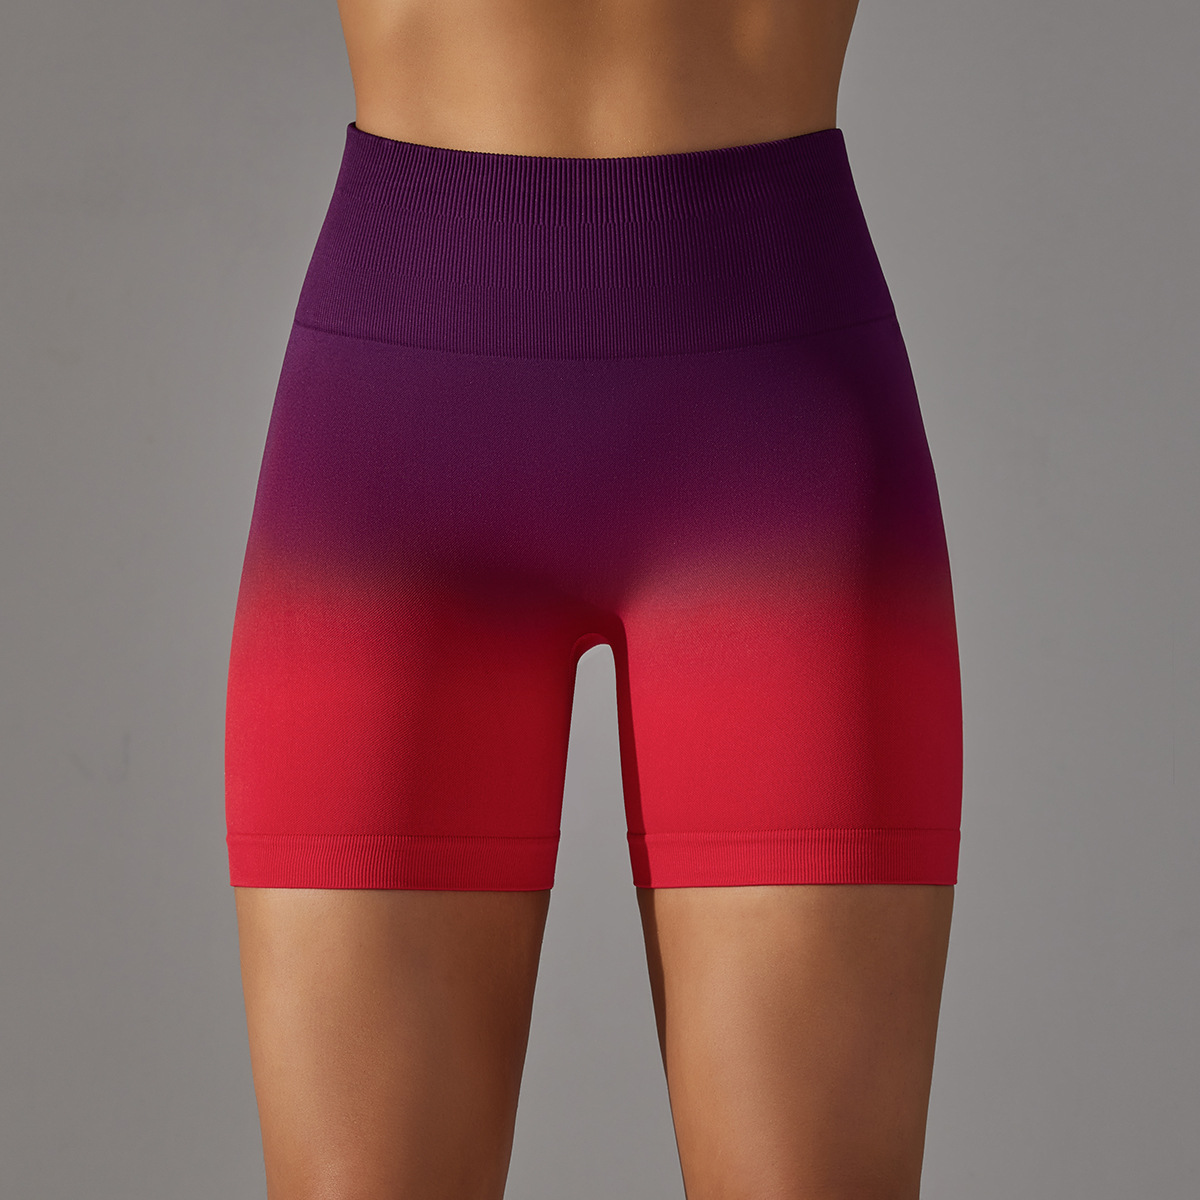 wholesale seamless shorts